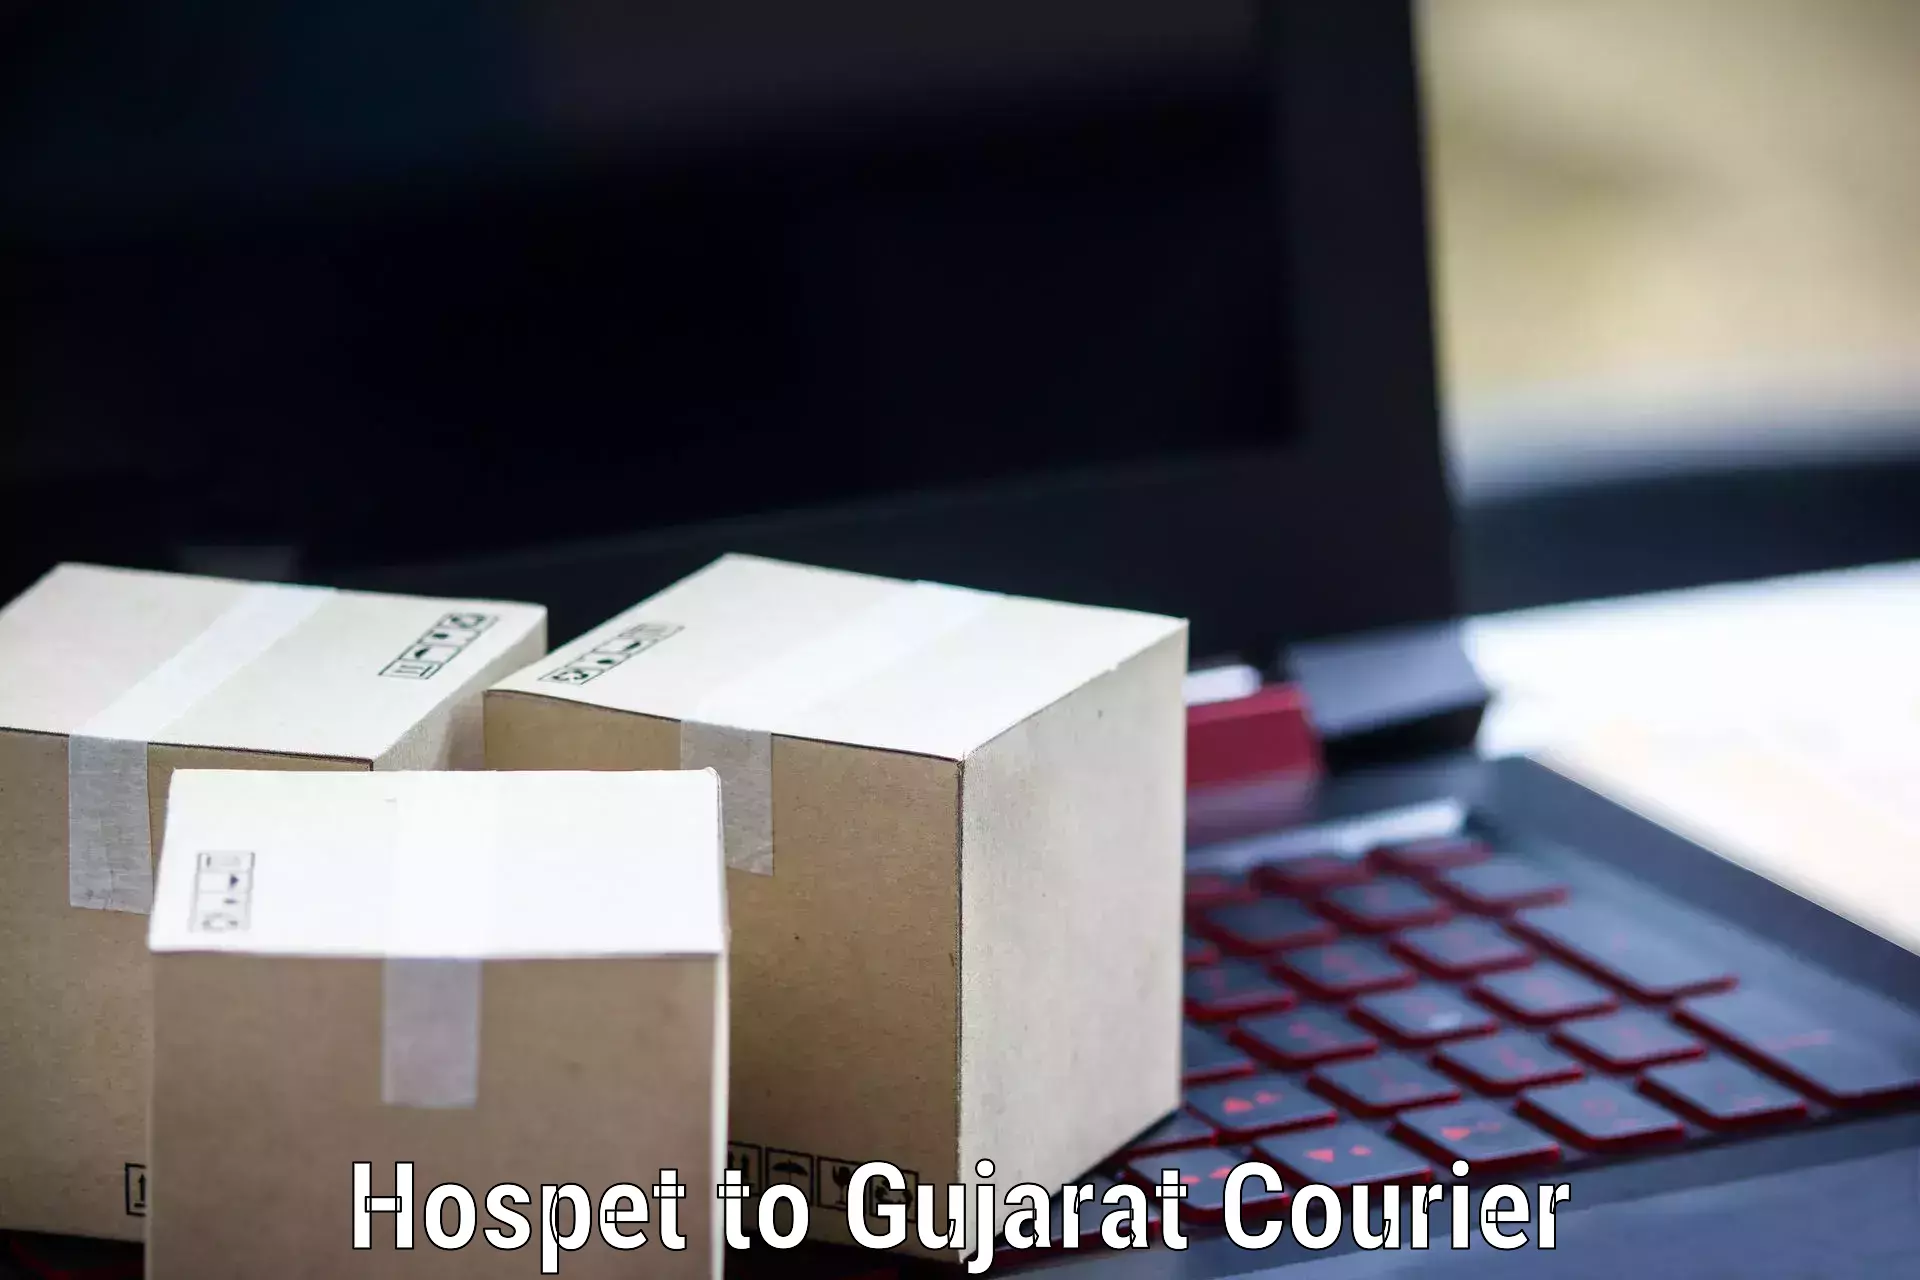 Courier service comparison Hospet to Ahmedabad